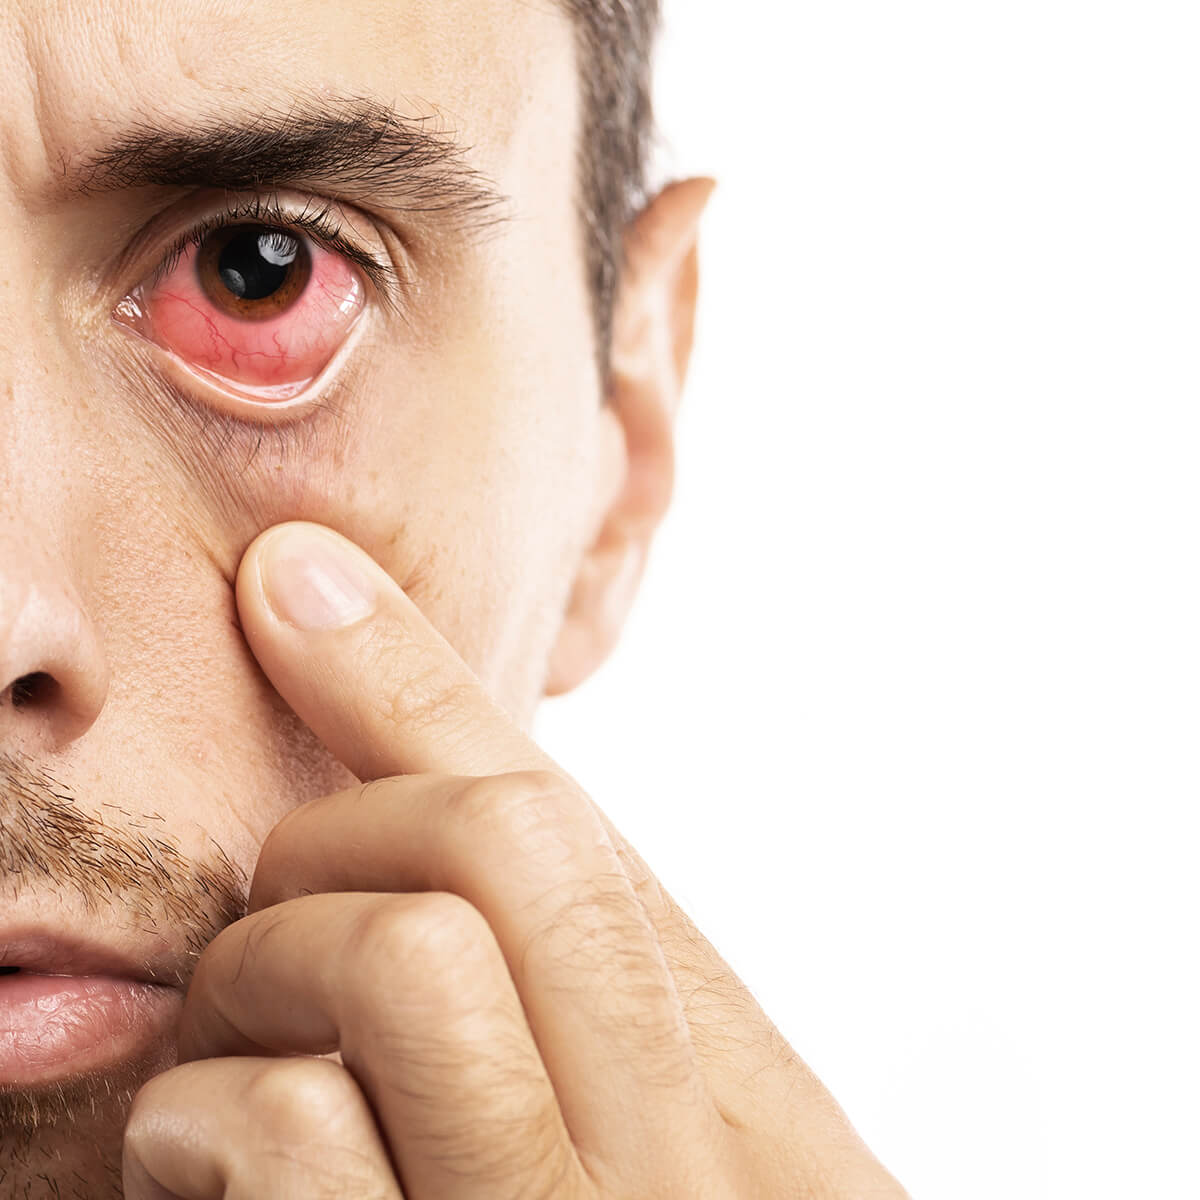 Sintomas de Espasmos no Olho